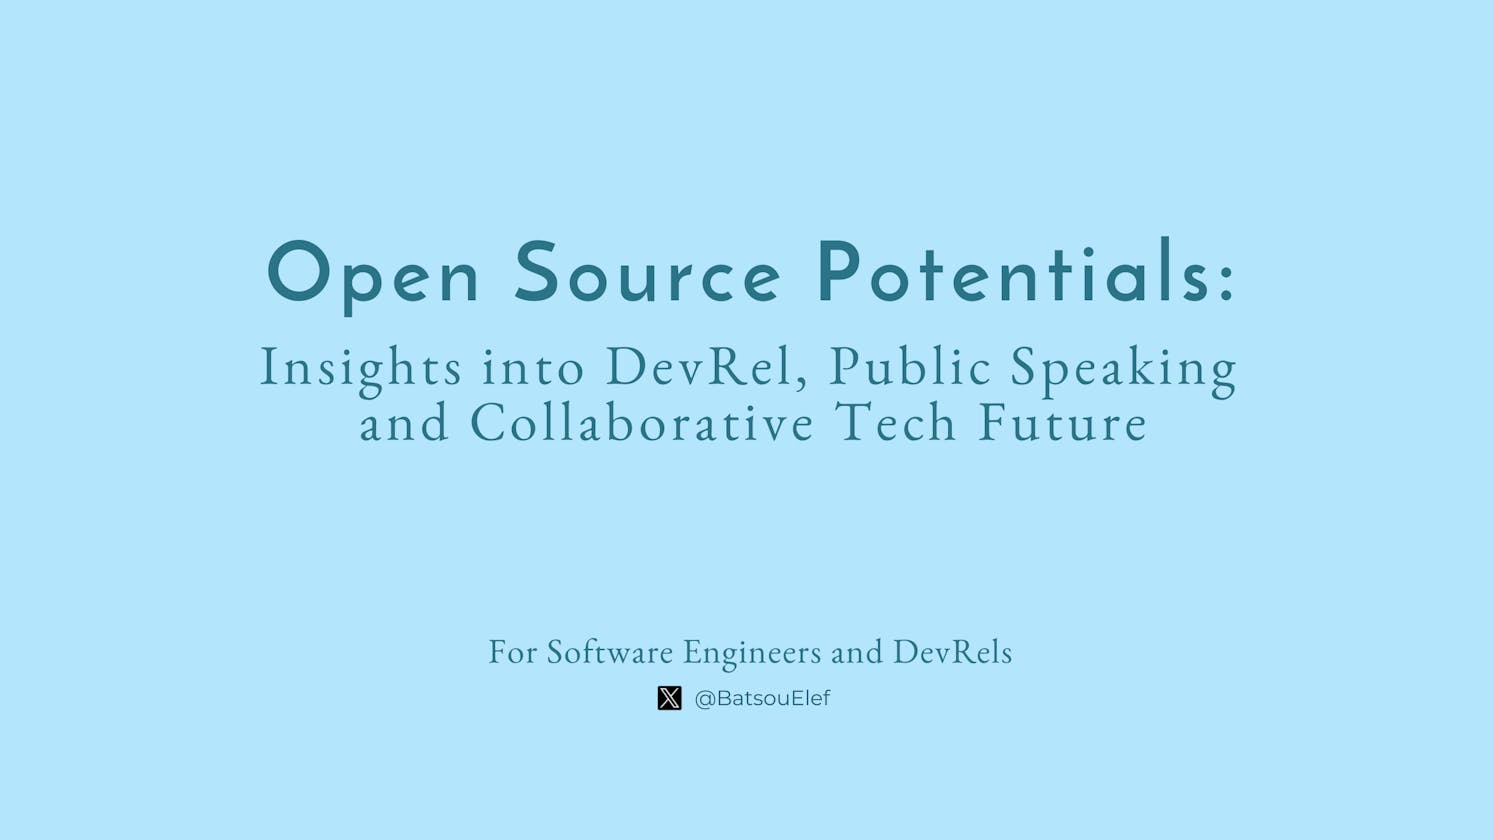 Open Source Potentials: Insights into DevRel, Public Speaking and Collaborative Tech Future